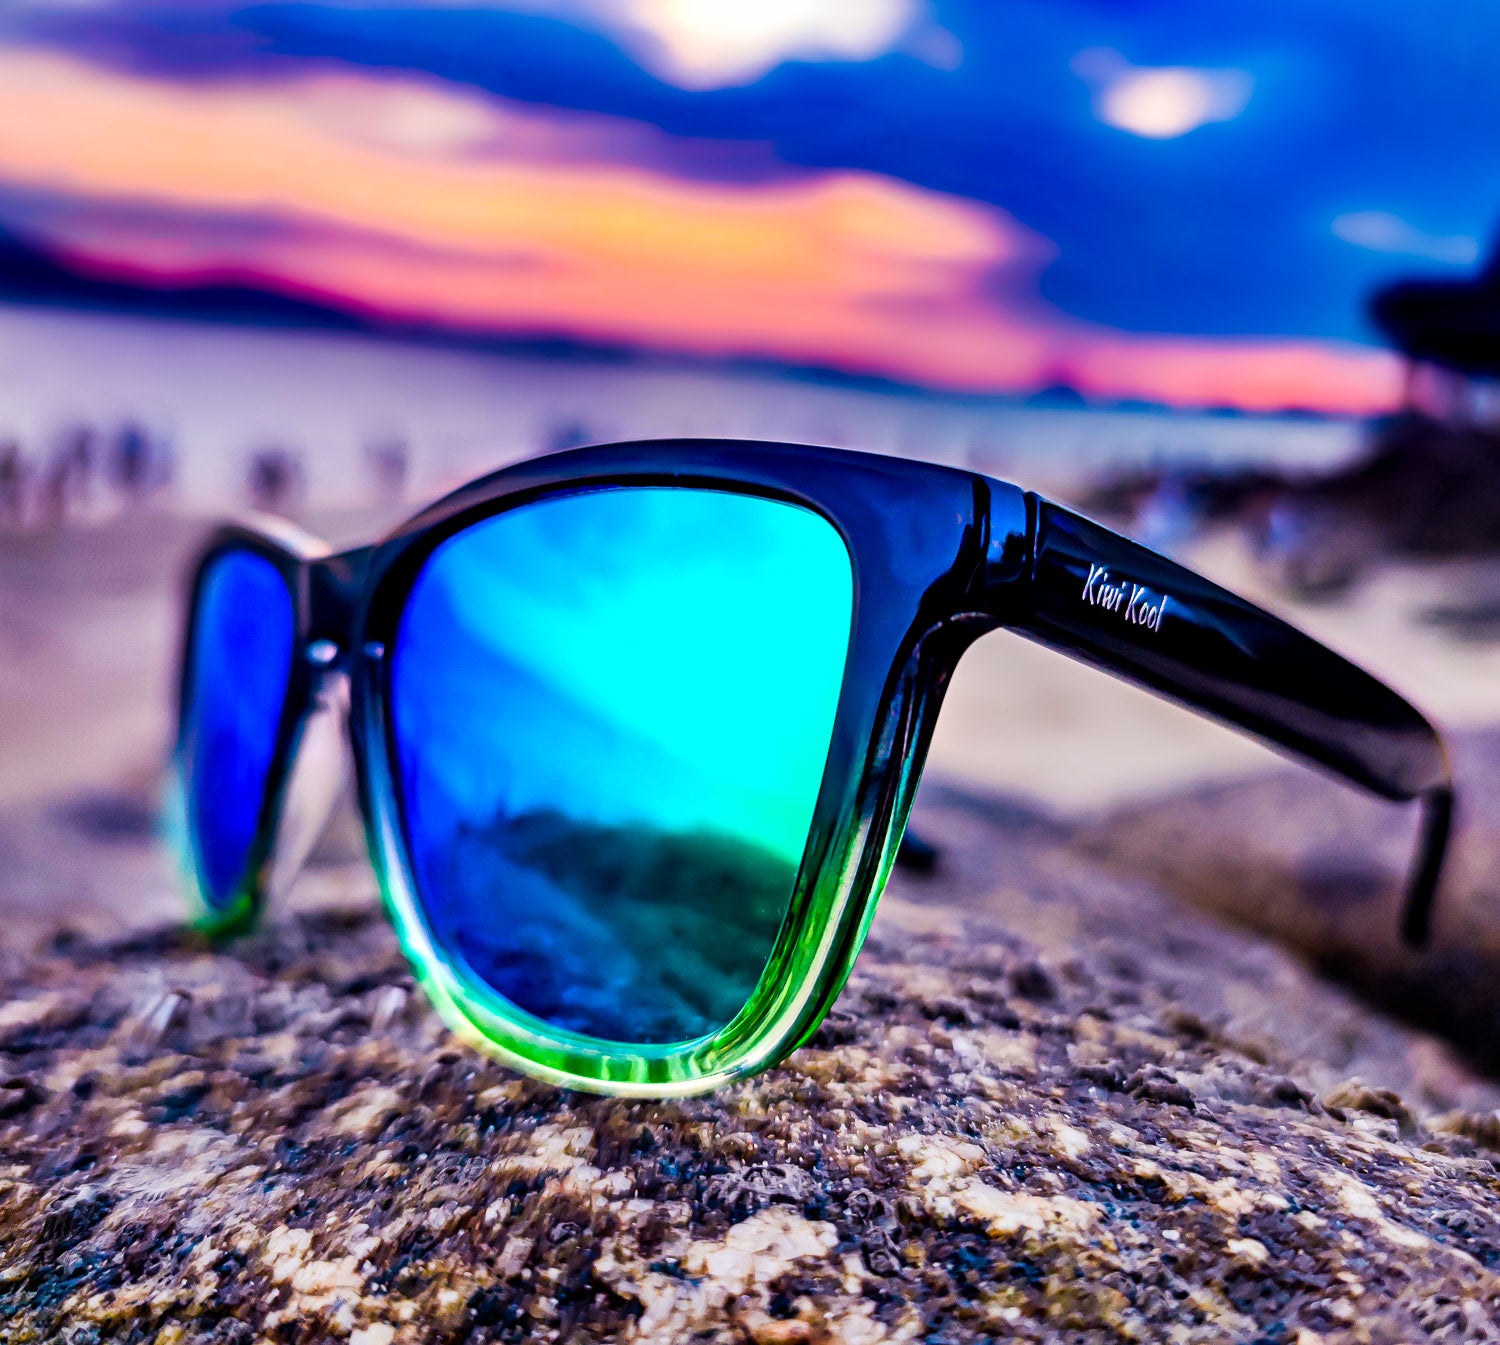 Polarized vs. Non-Polarized Sunglasses Guide - Are Polarized Lenses Better?